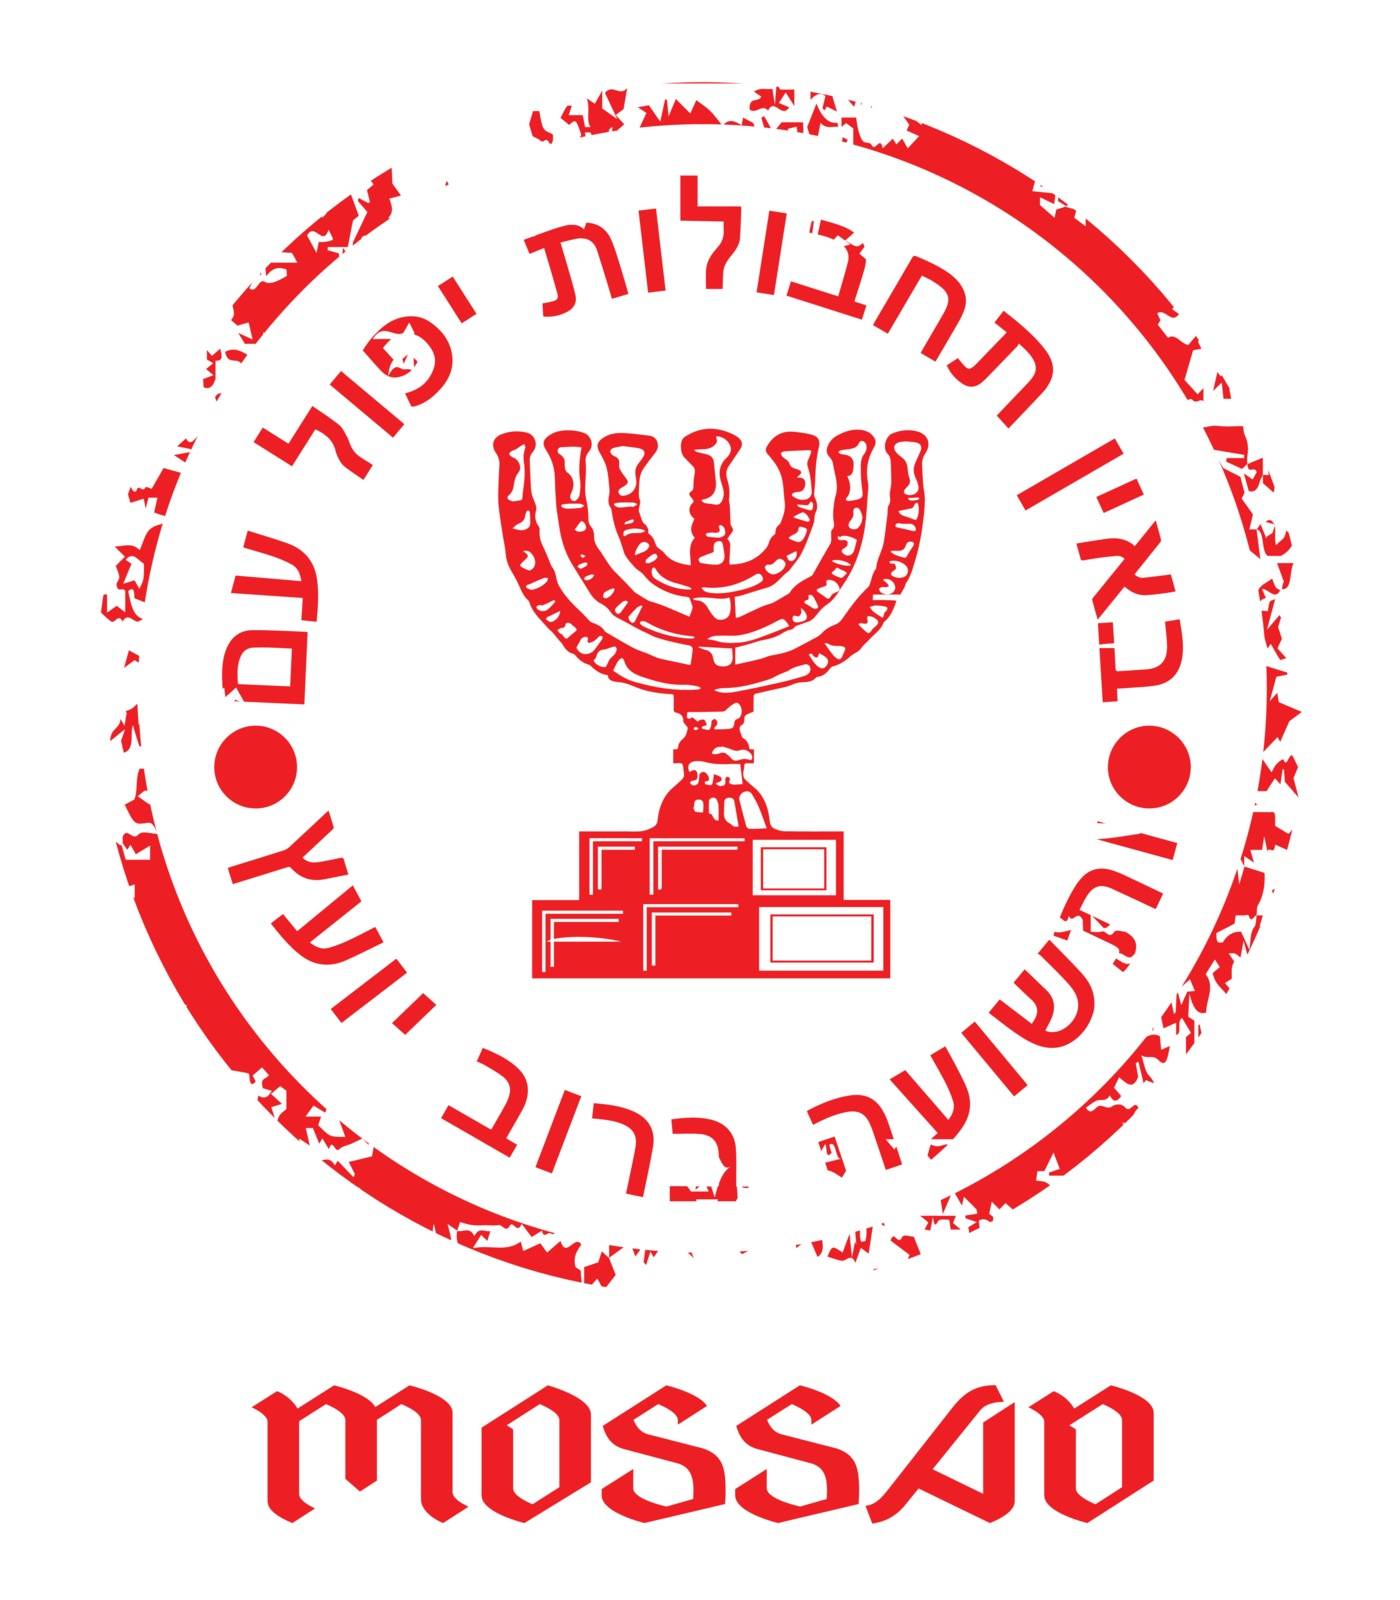 The insignia of the Israel secret organisation Mossad